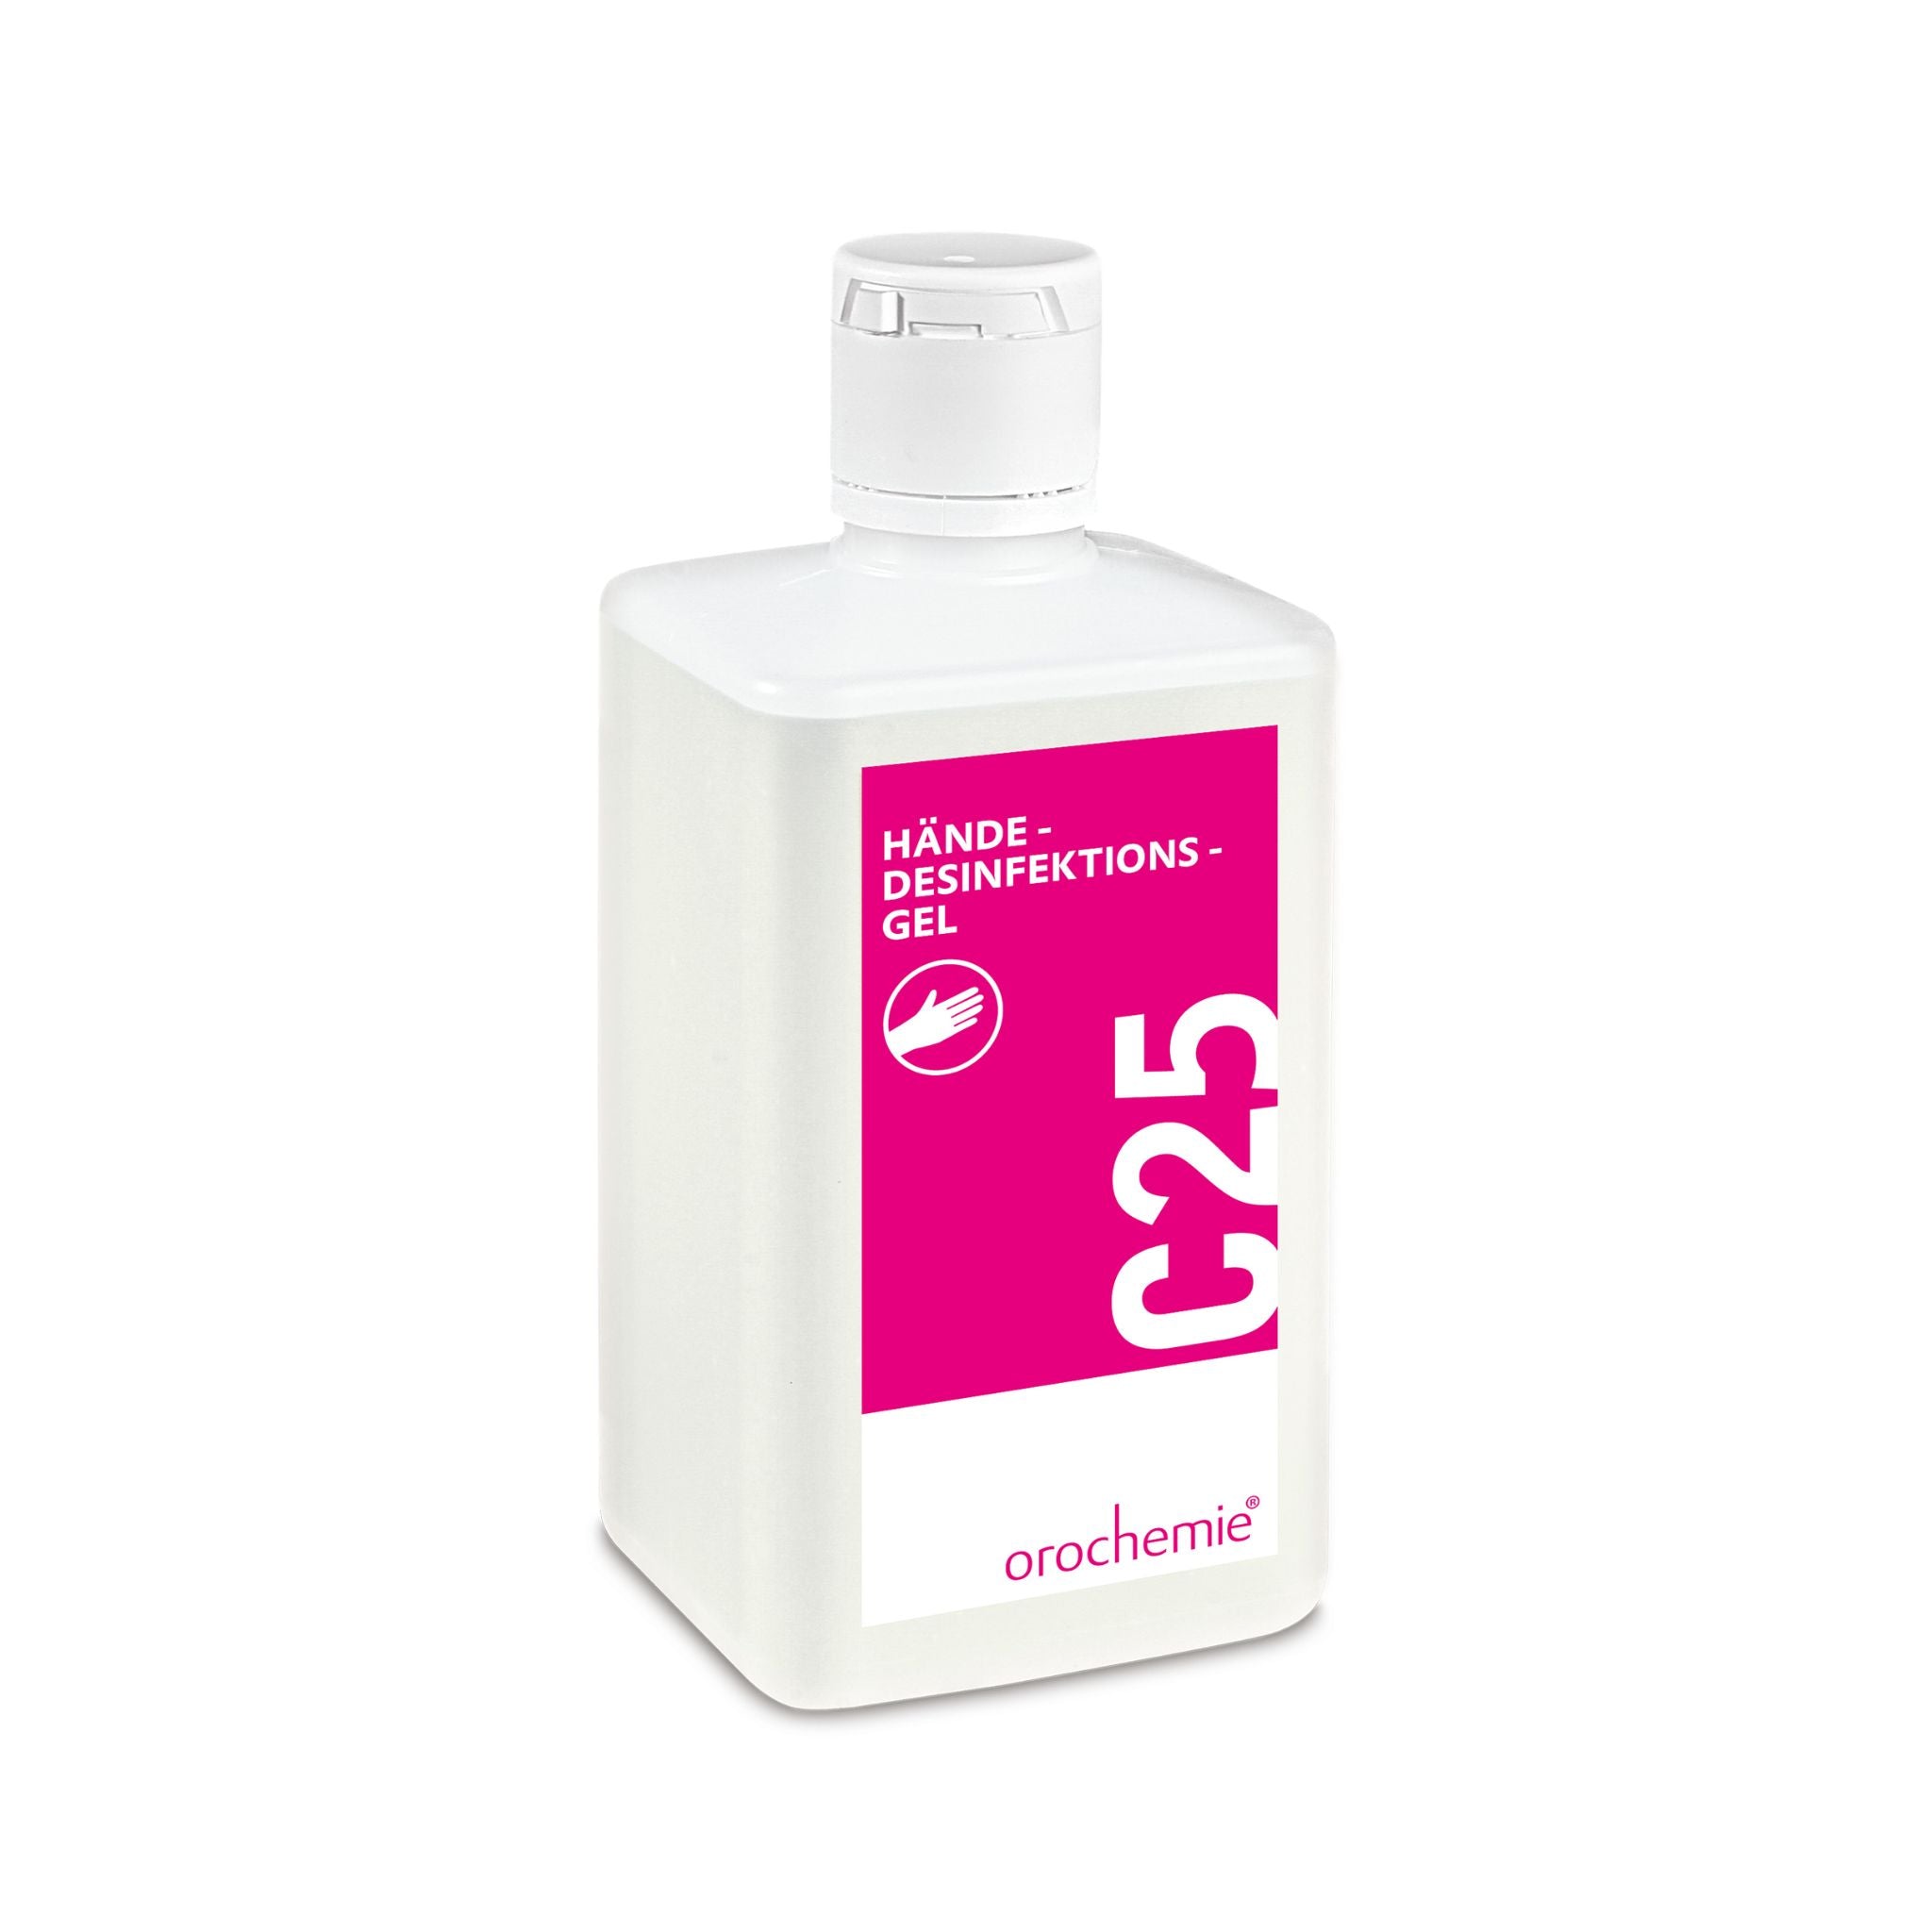 Orochemie C25 hand disinfectant gel